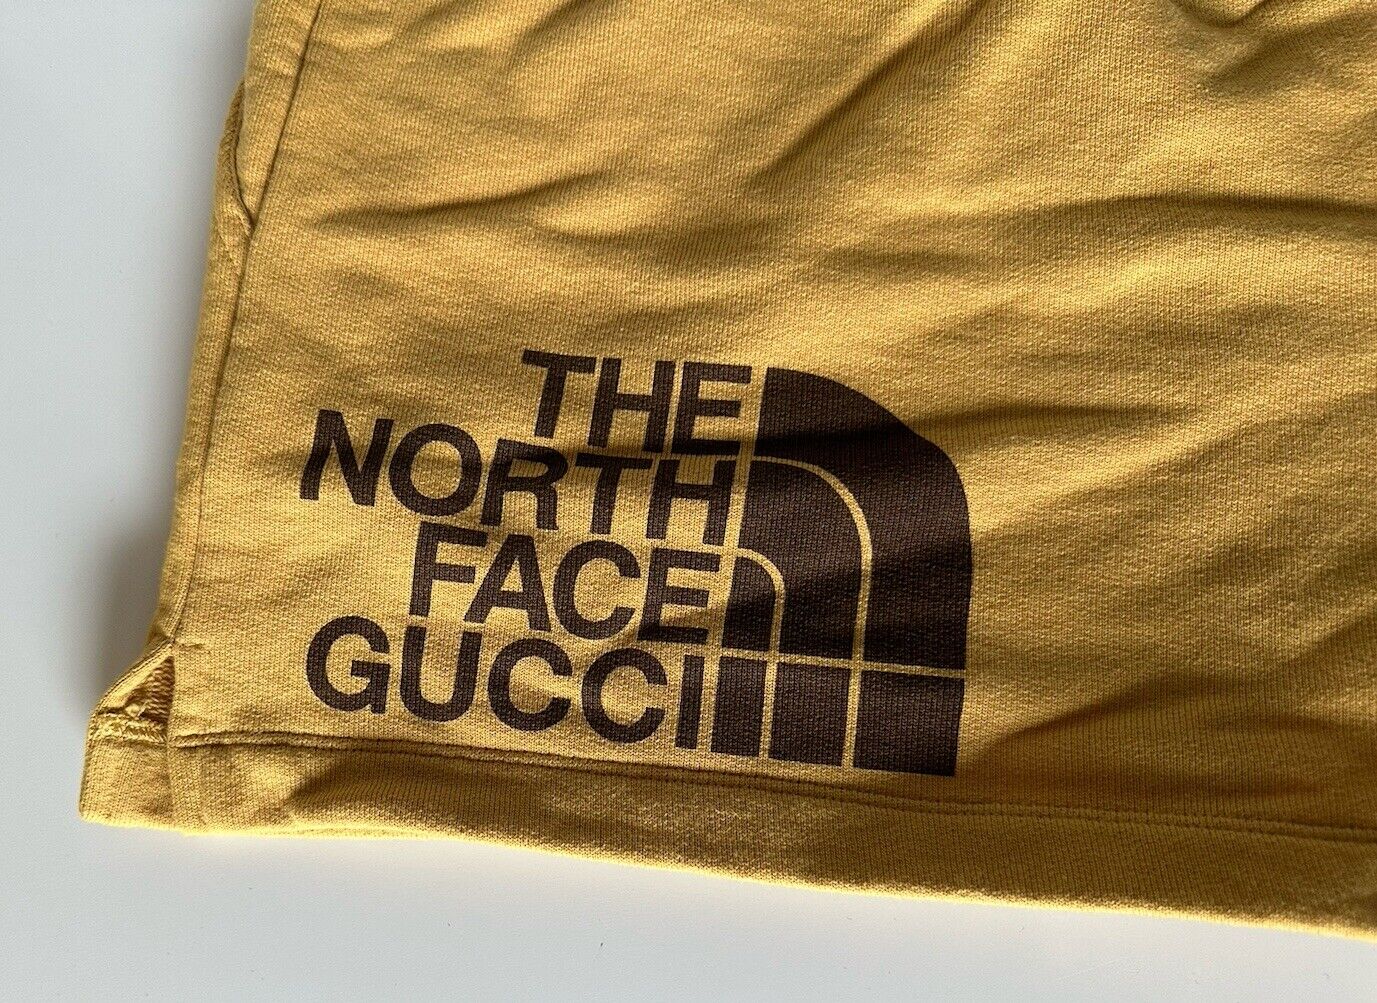 NWT $620 The North Face x Gucci Web Print Men's Shorts Mustard Large IT 651726